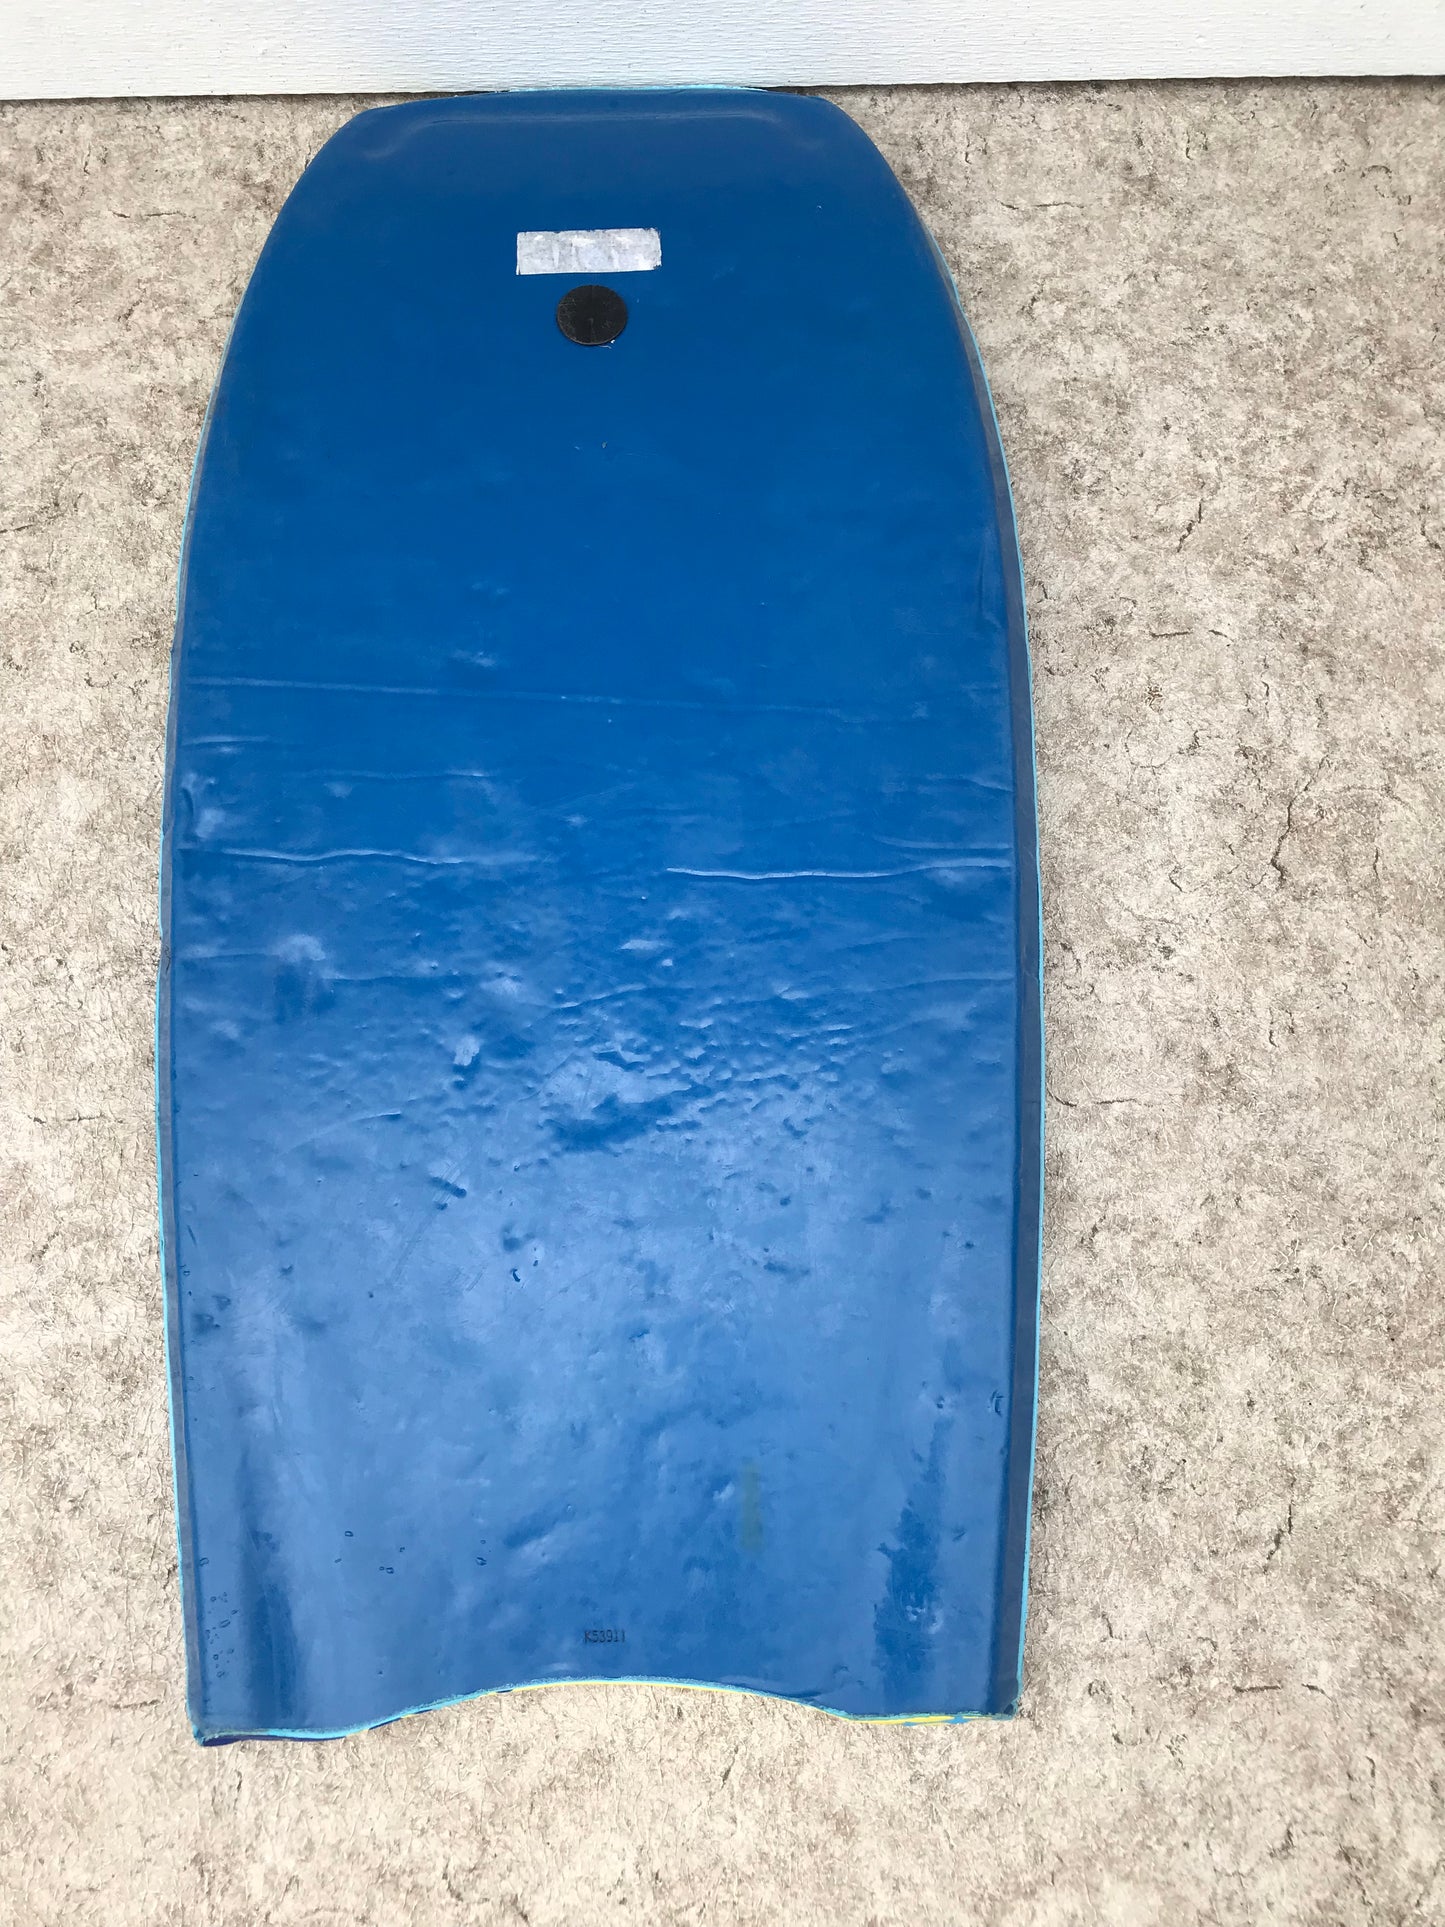 Surf Bodyboard Skim Boogie Board Wave Storm Blue Yellow  39 inch